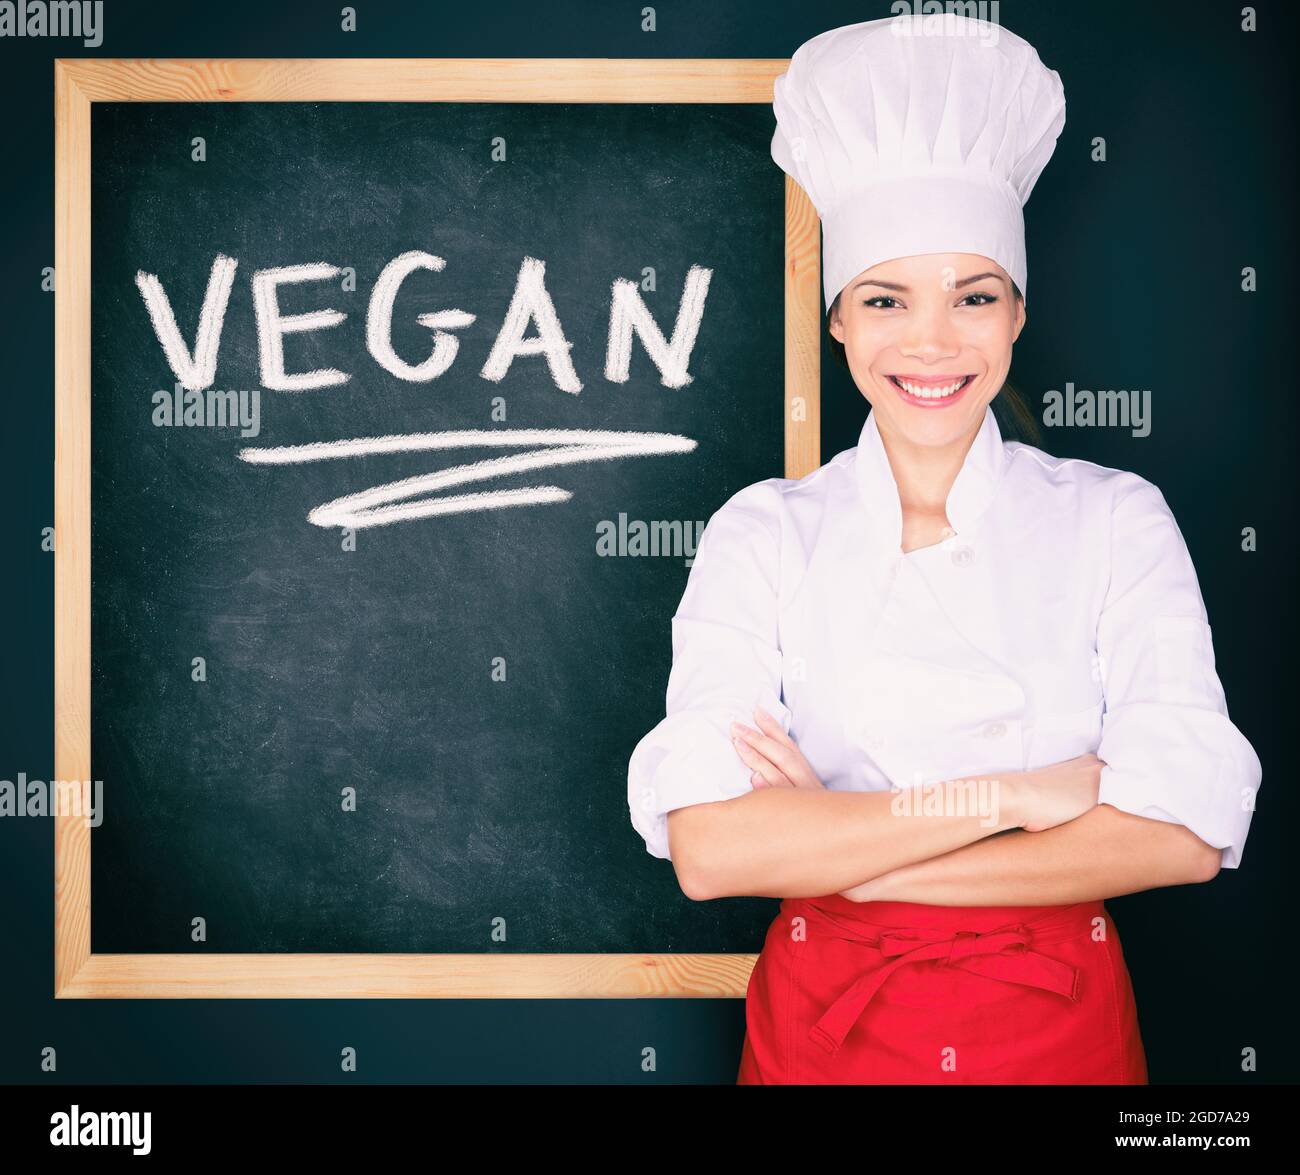 Vegan menu woman chef wearing uniform showing blackboard sign at restaurant for today's special. Vegeterian food. Word VEGAN handwritten on black Stock Photo